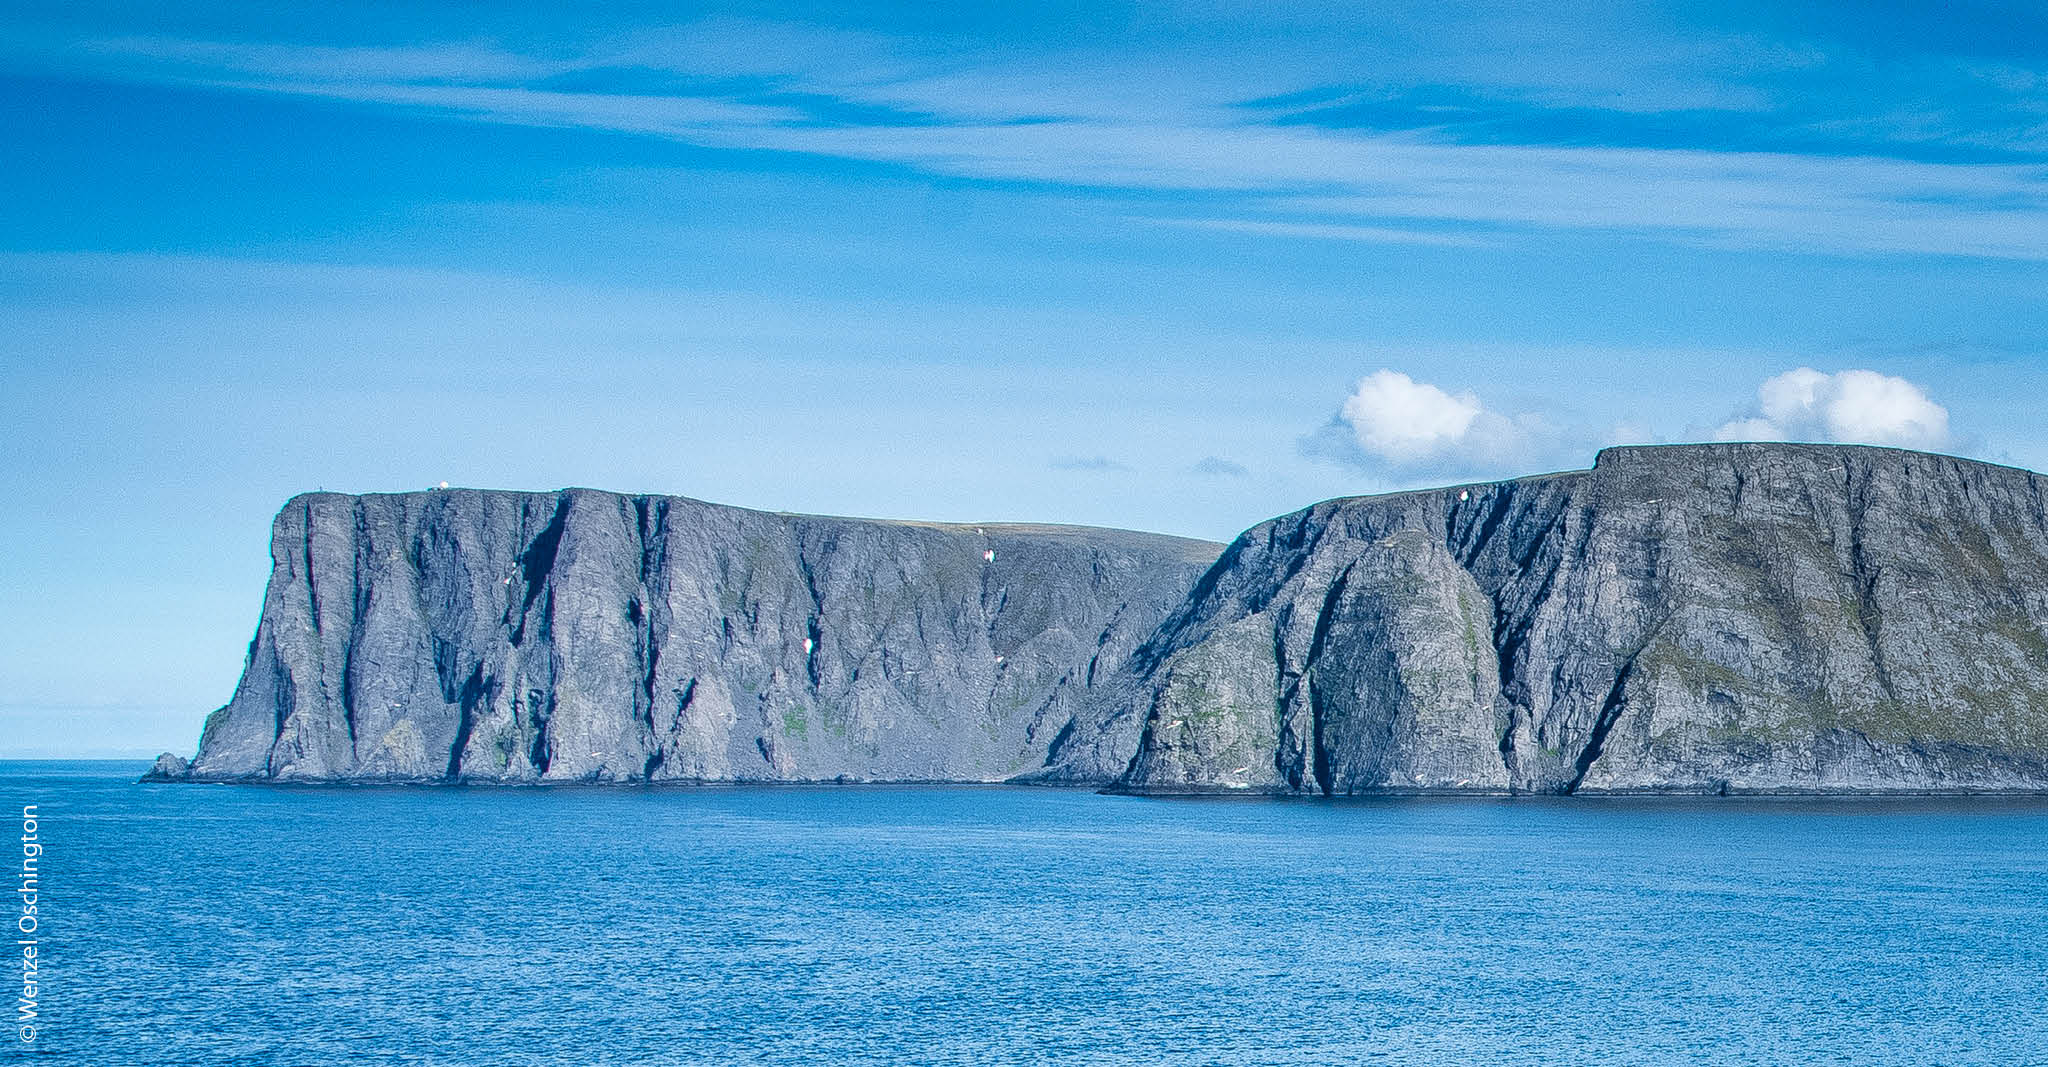 Fjord-Formationen in Norwegen hinter einem blauen Meer